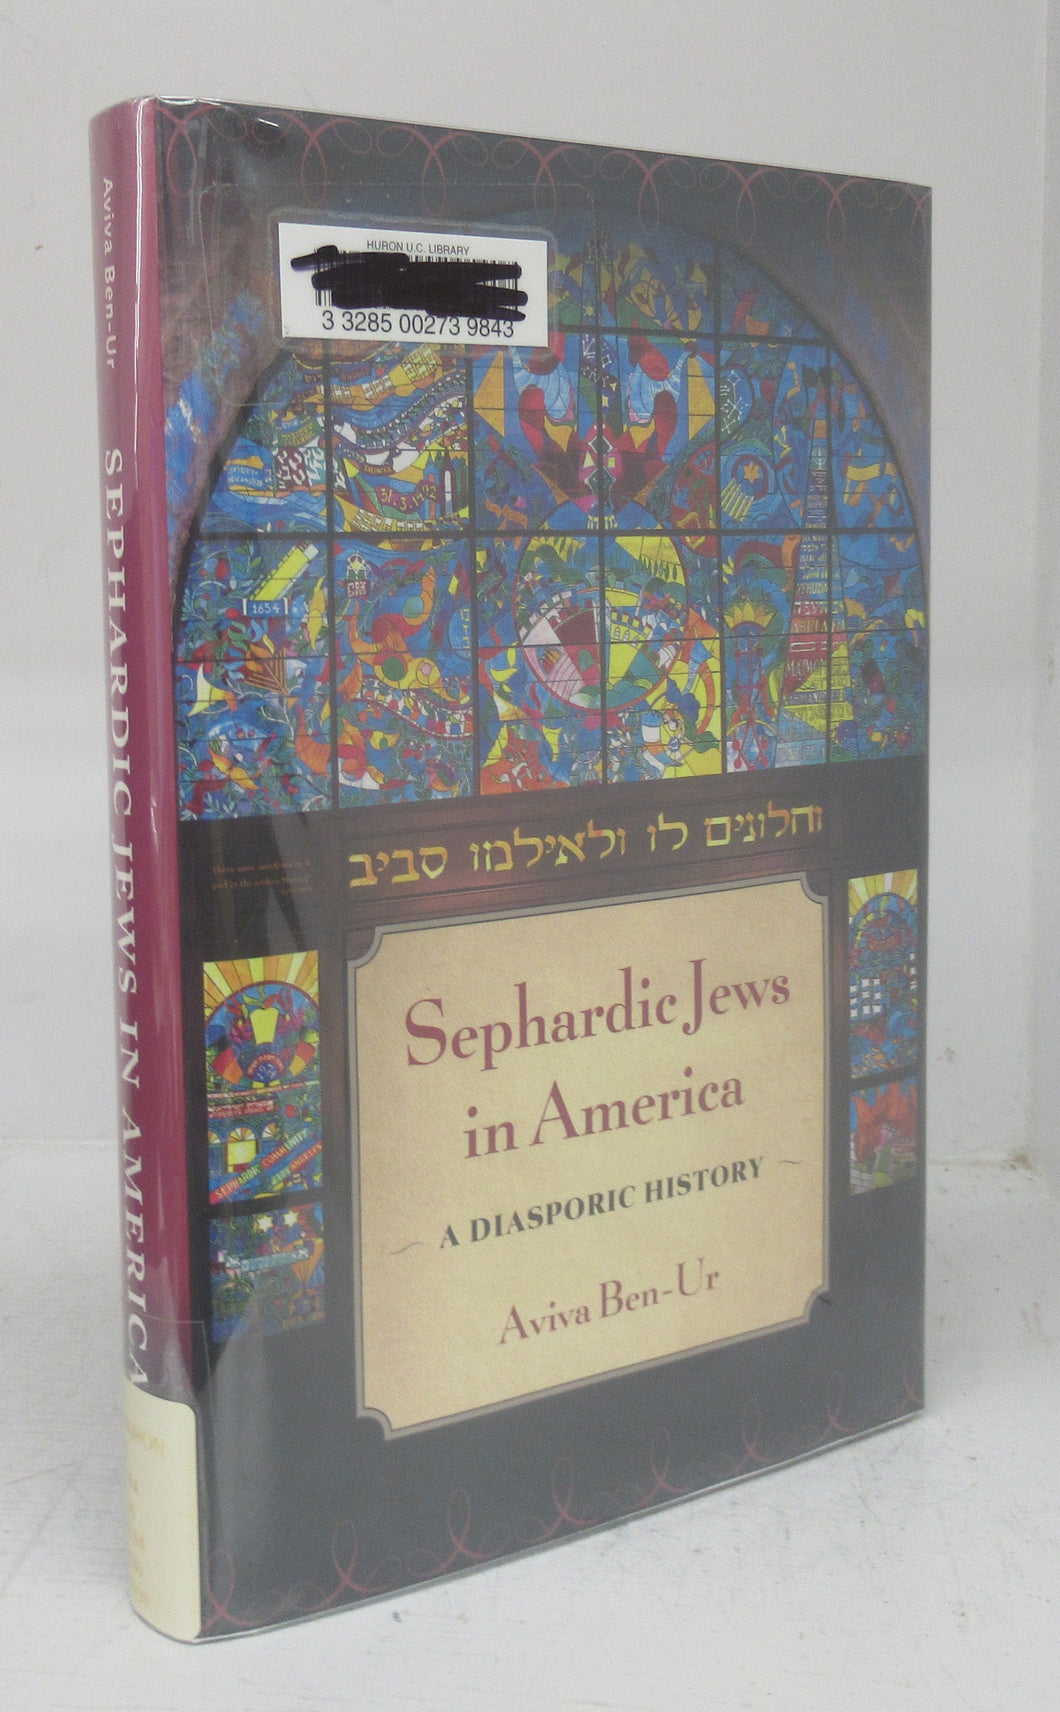 Sephardic Jews in America: A Diasporic History